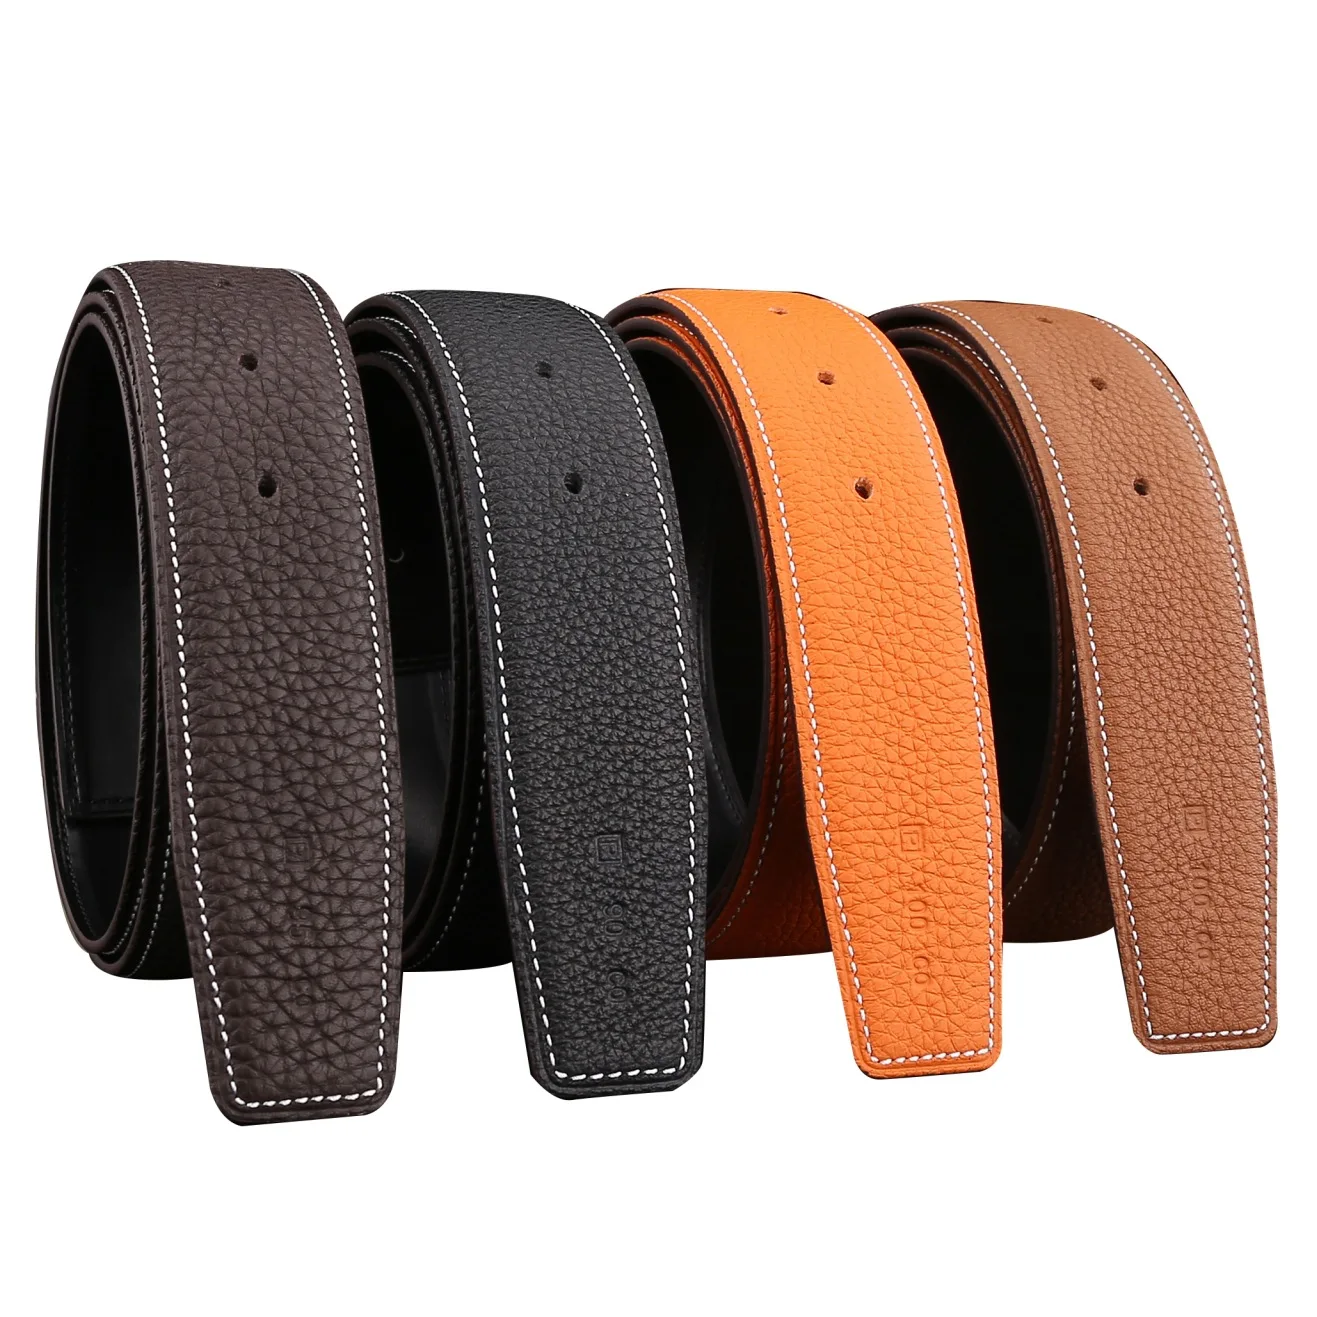 No-buckle Belt Luxury Brand H Belt Men's Genuine Leather Belt Jeans Lychee Pattern Belt Cinturones Hombre High Quality 3.8cm